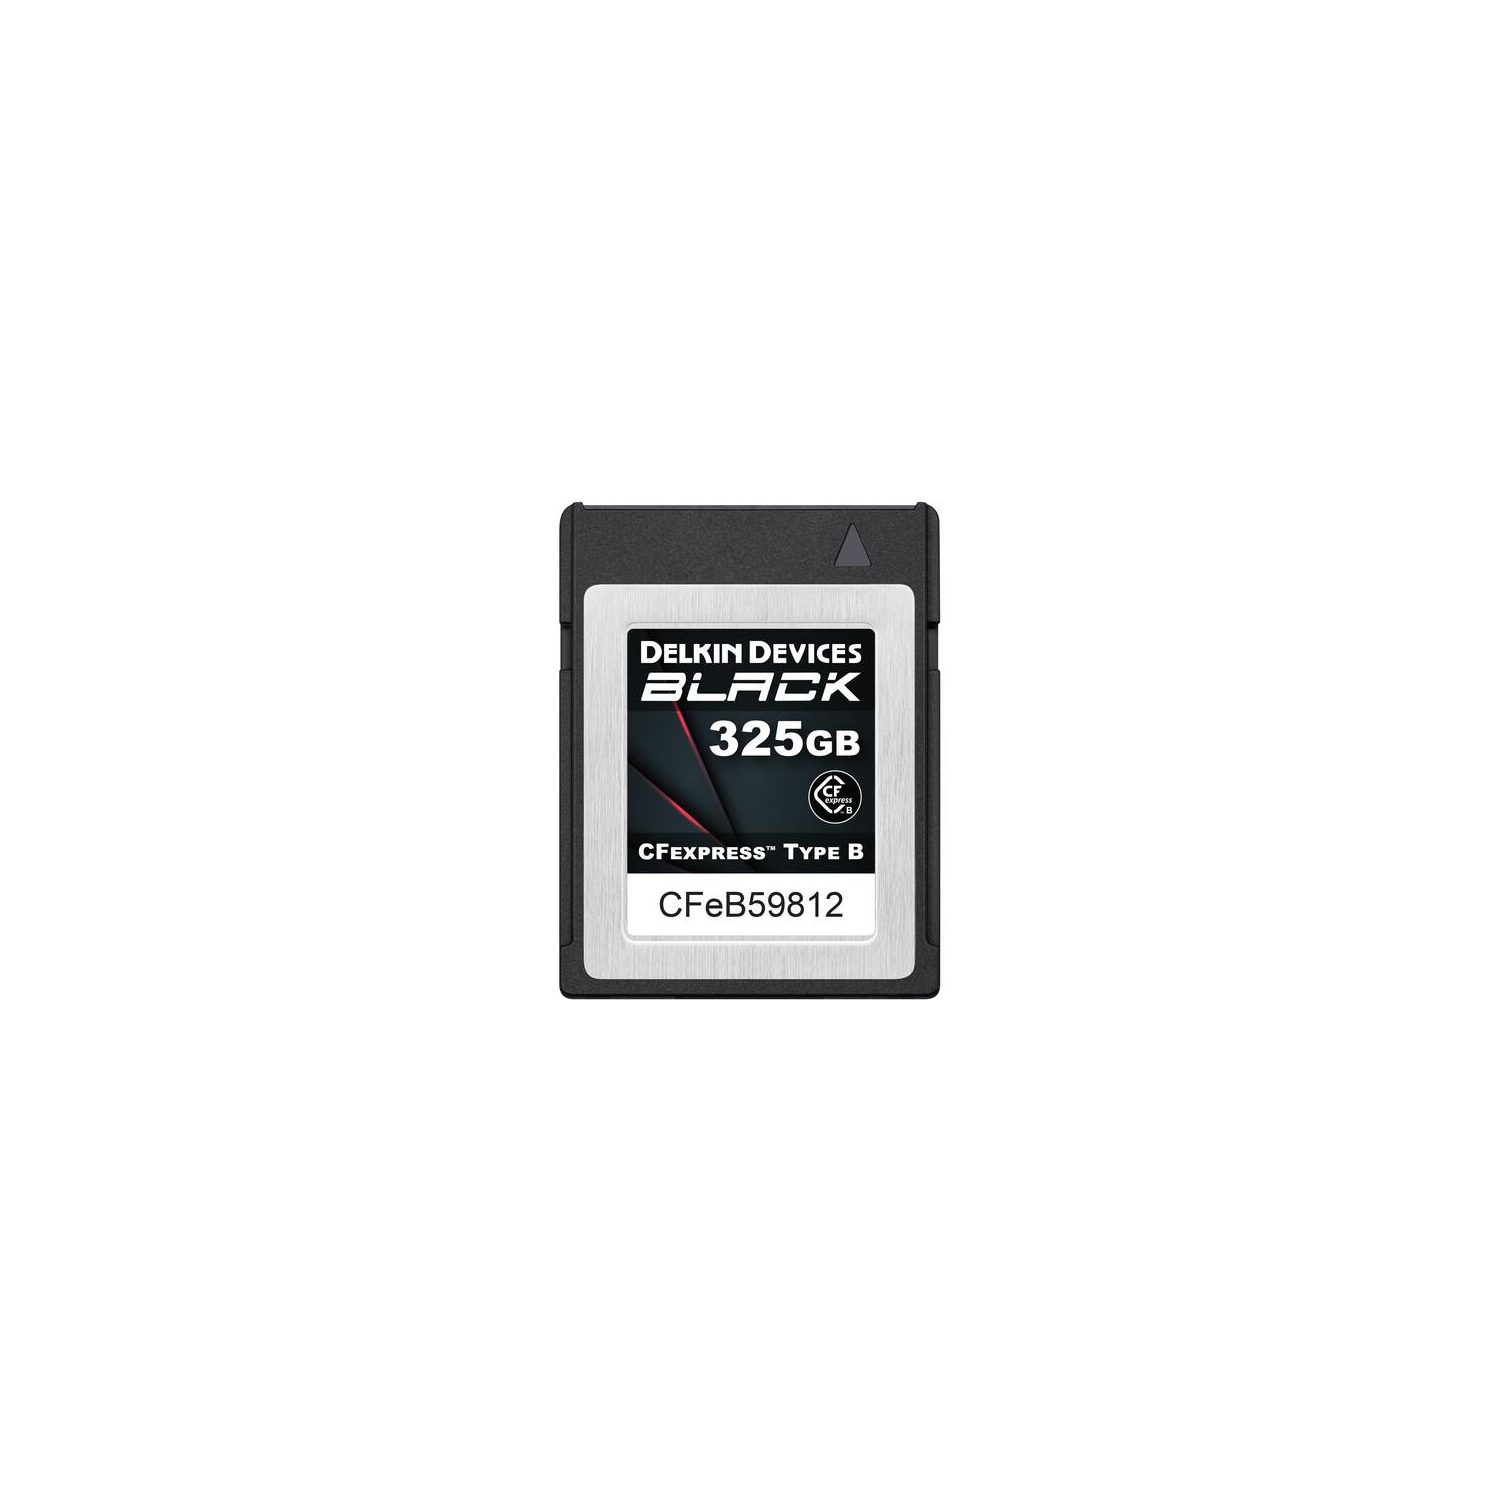 Delkin 325GB BLACK CFexpress Type B Memory Card